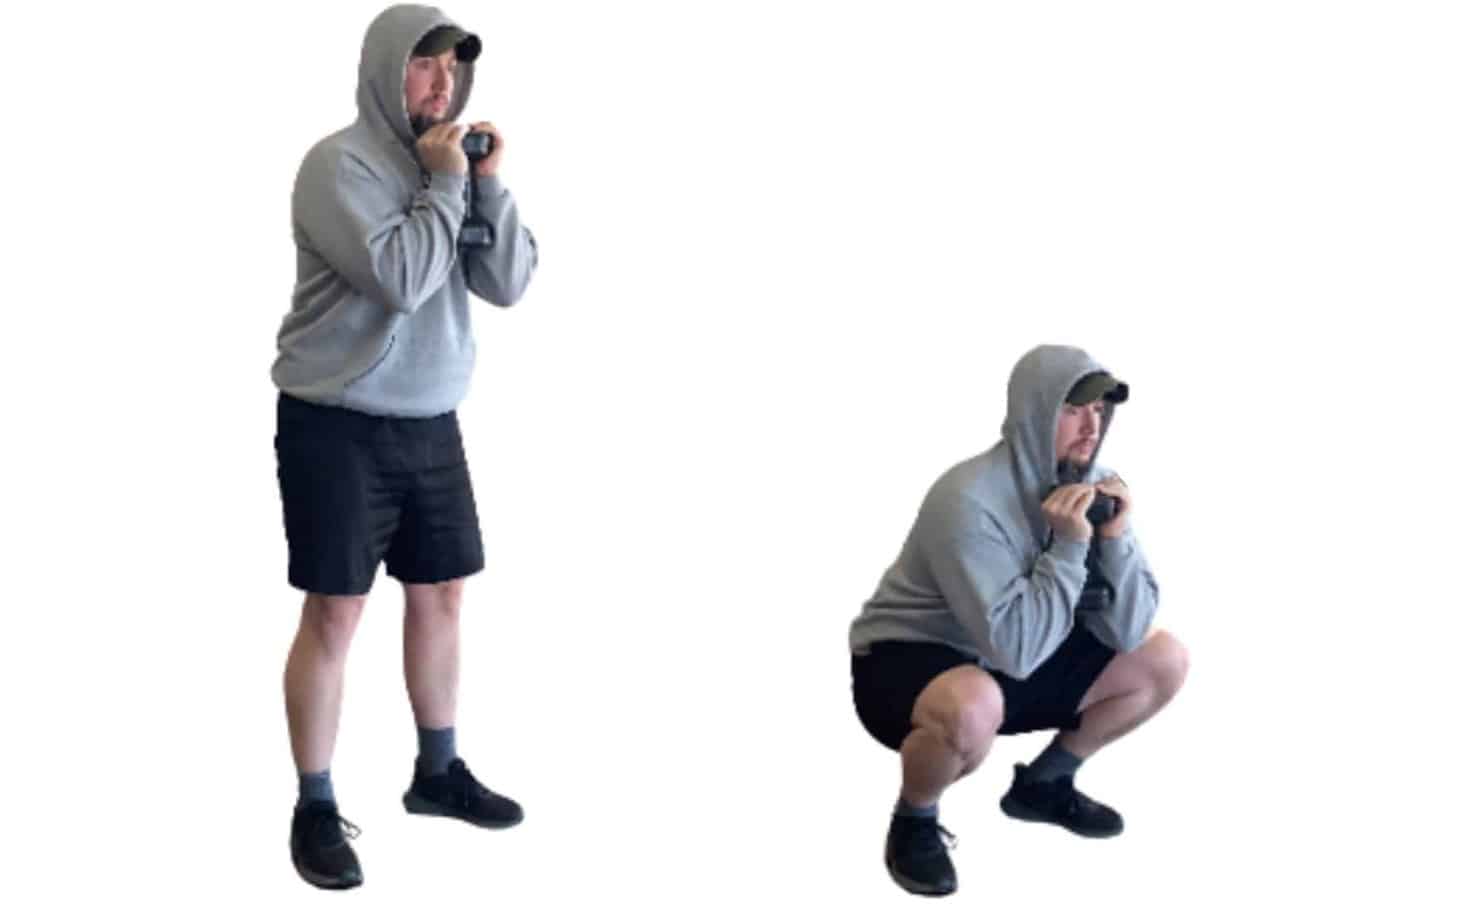 Goblet squat exercises